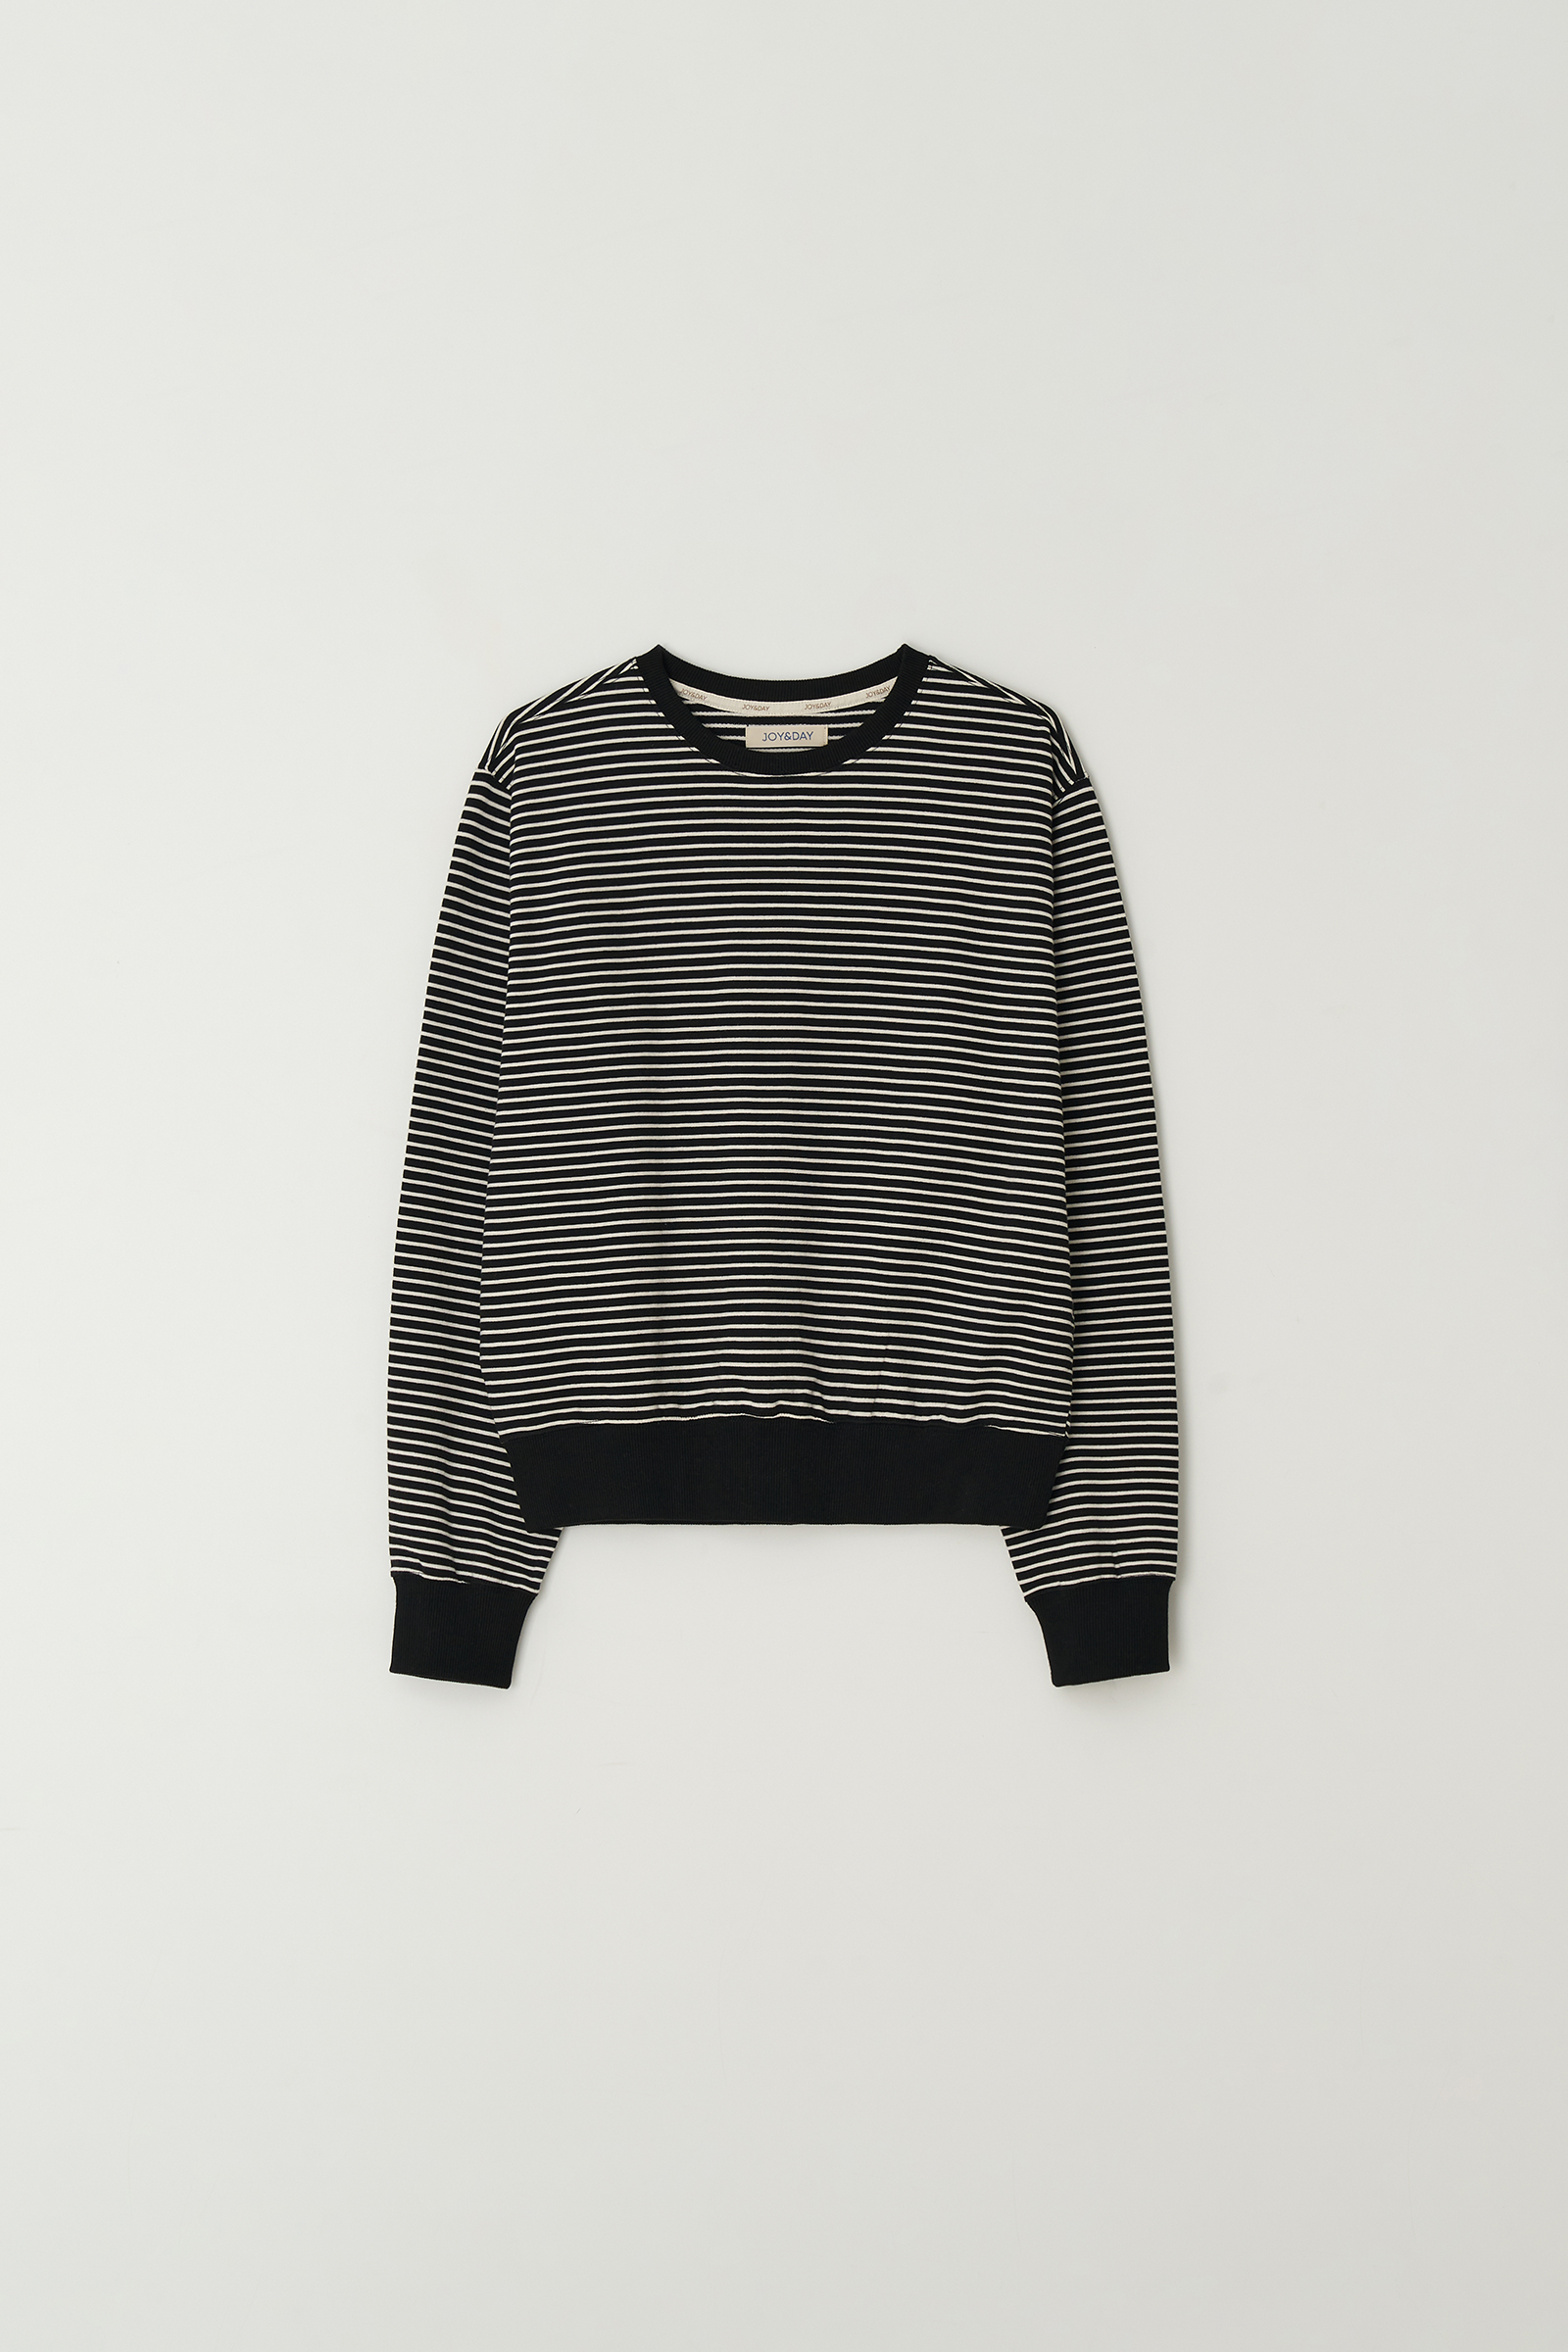 [3rd] Pin Stripe Sweatshirt